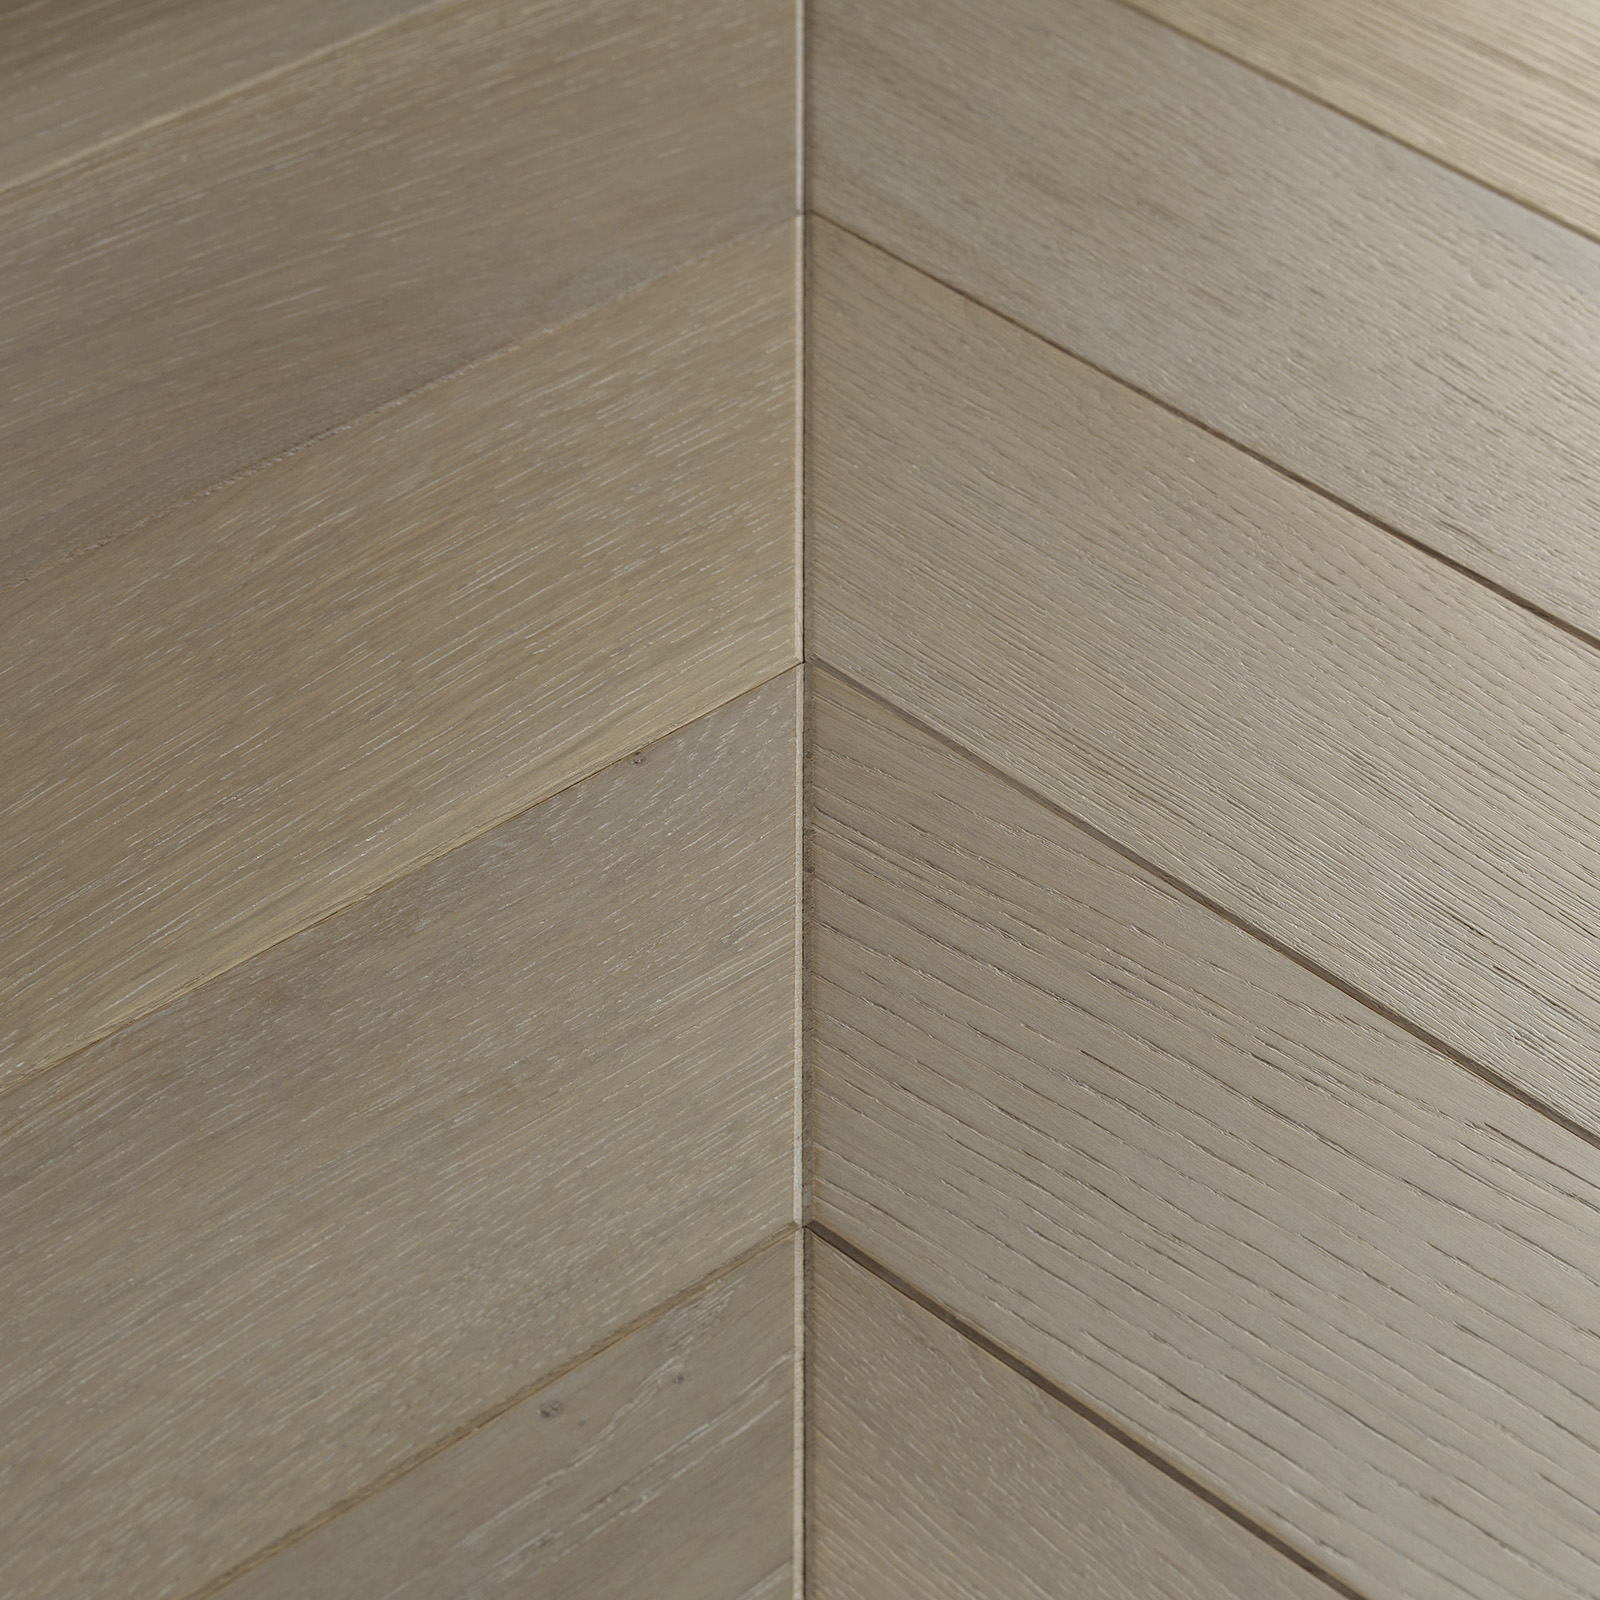 engineered chevron parquet wood flooring in grey tones